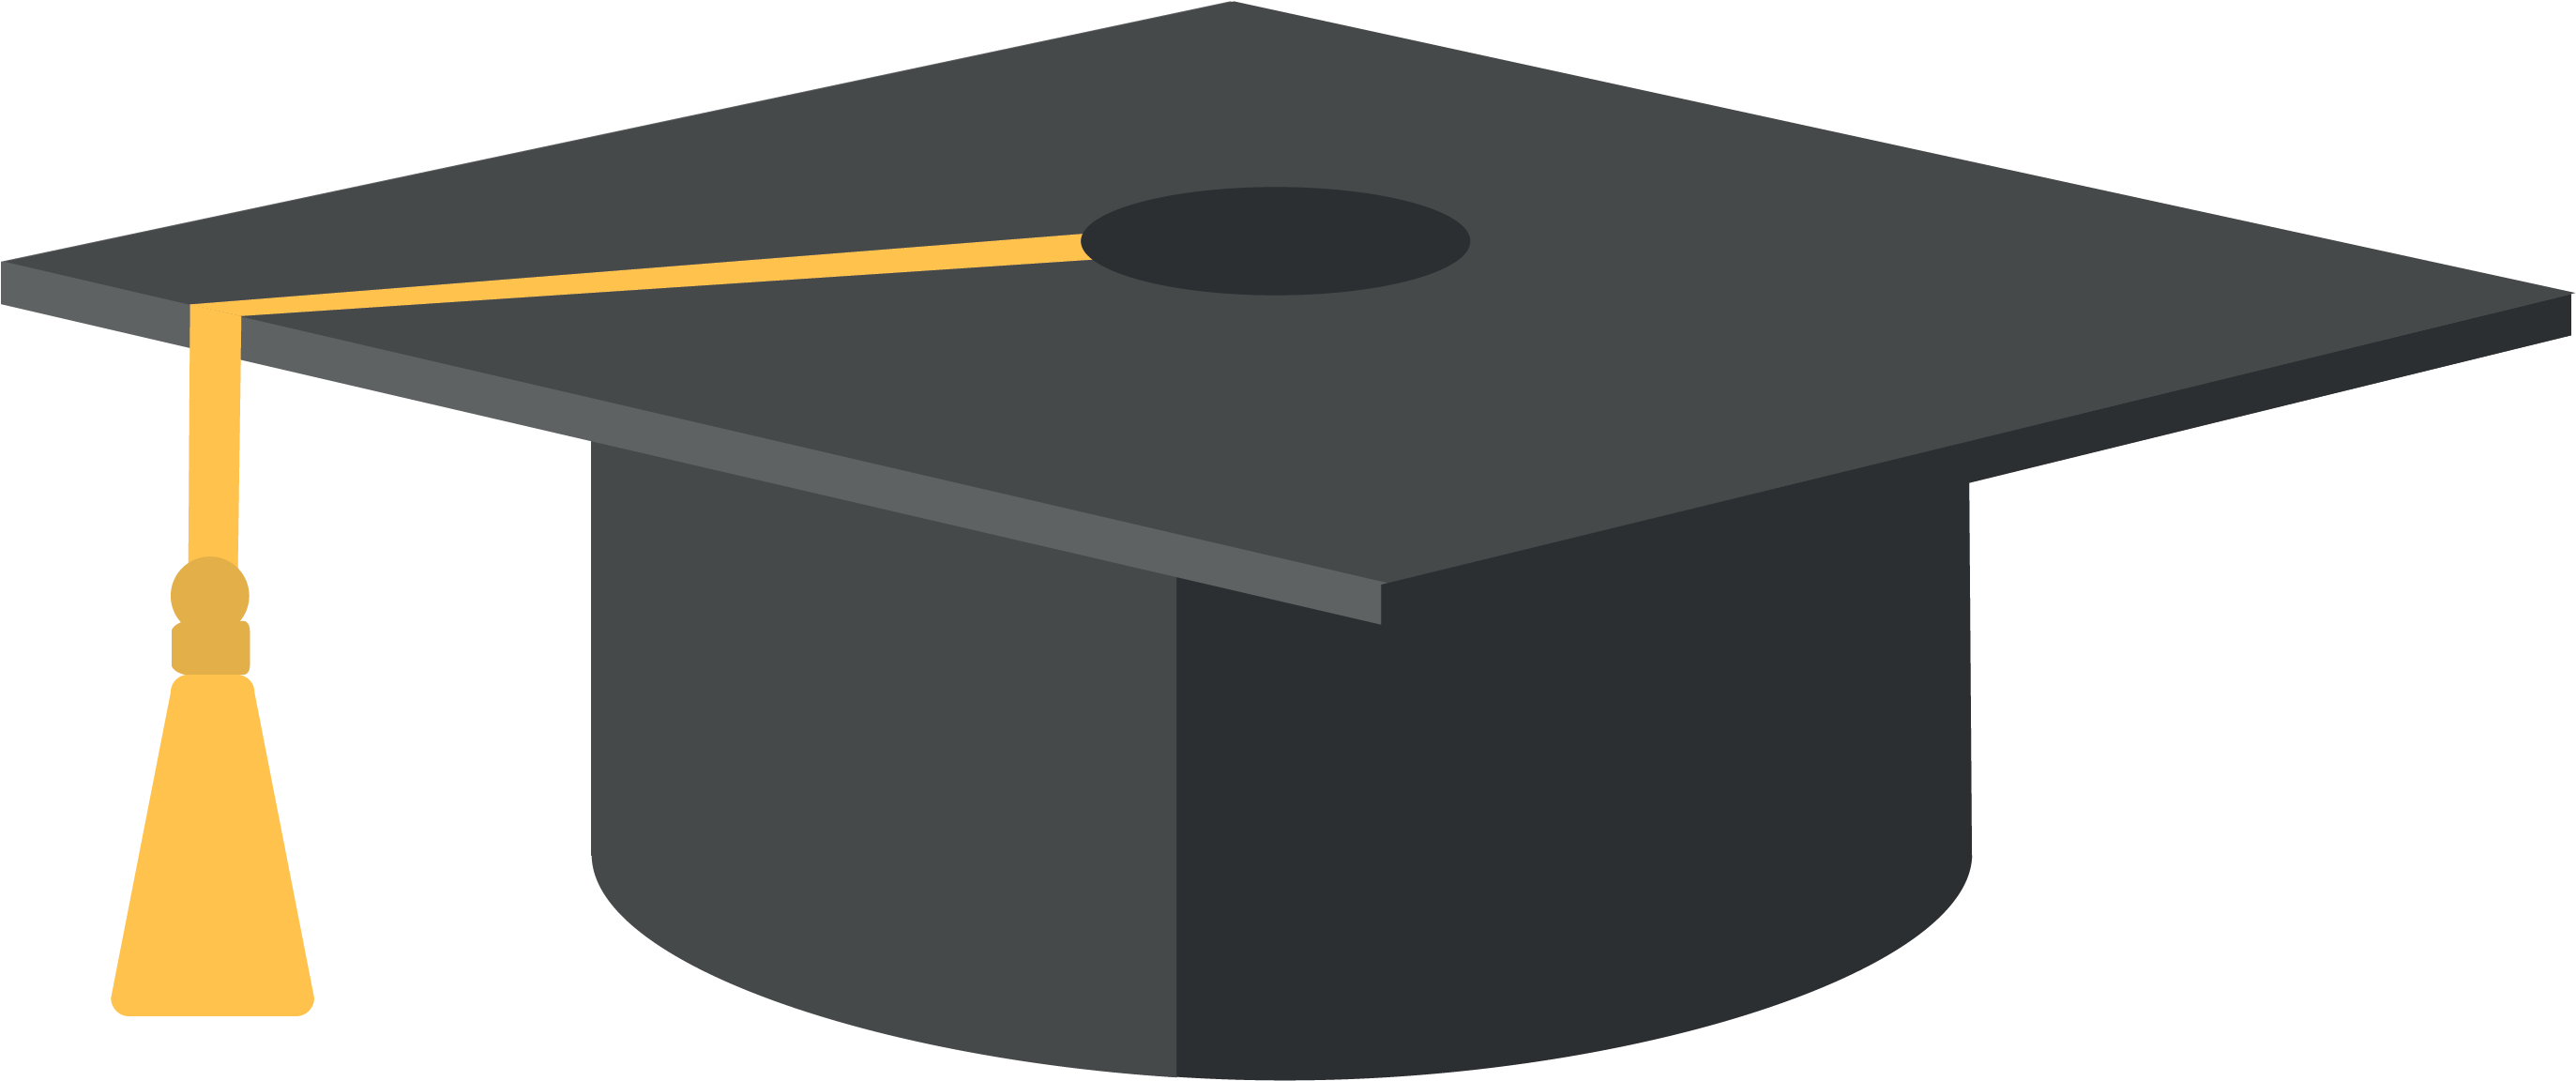 A Black Square Graduation Cap With A Yellow Stick